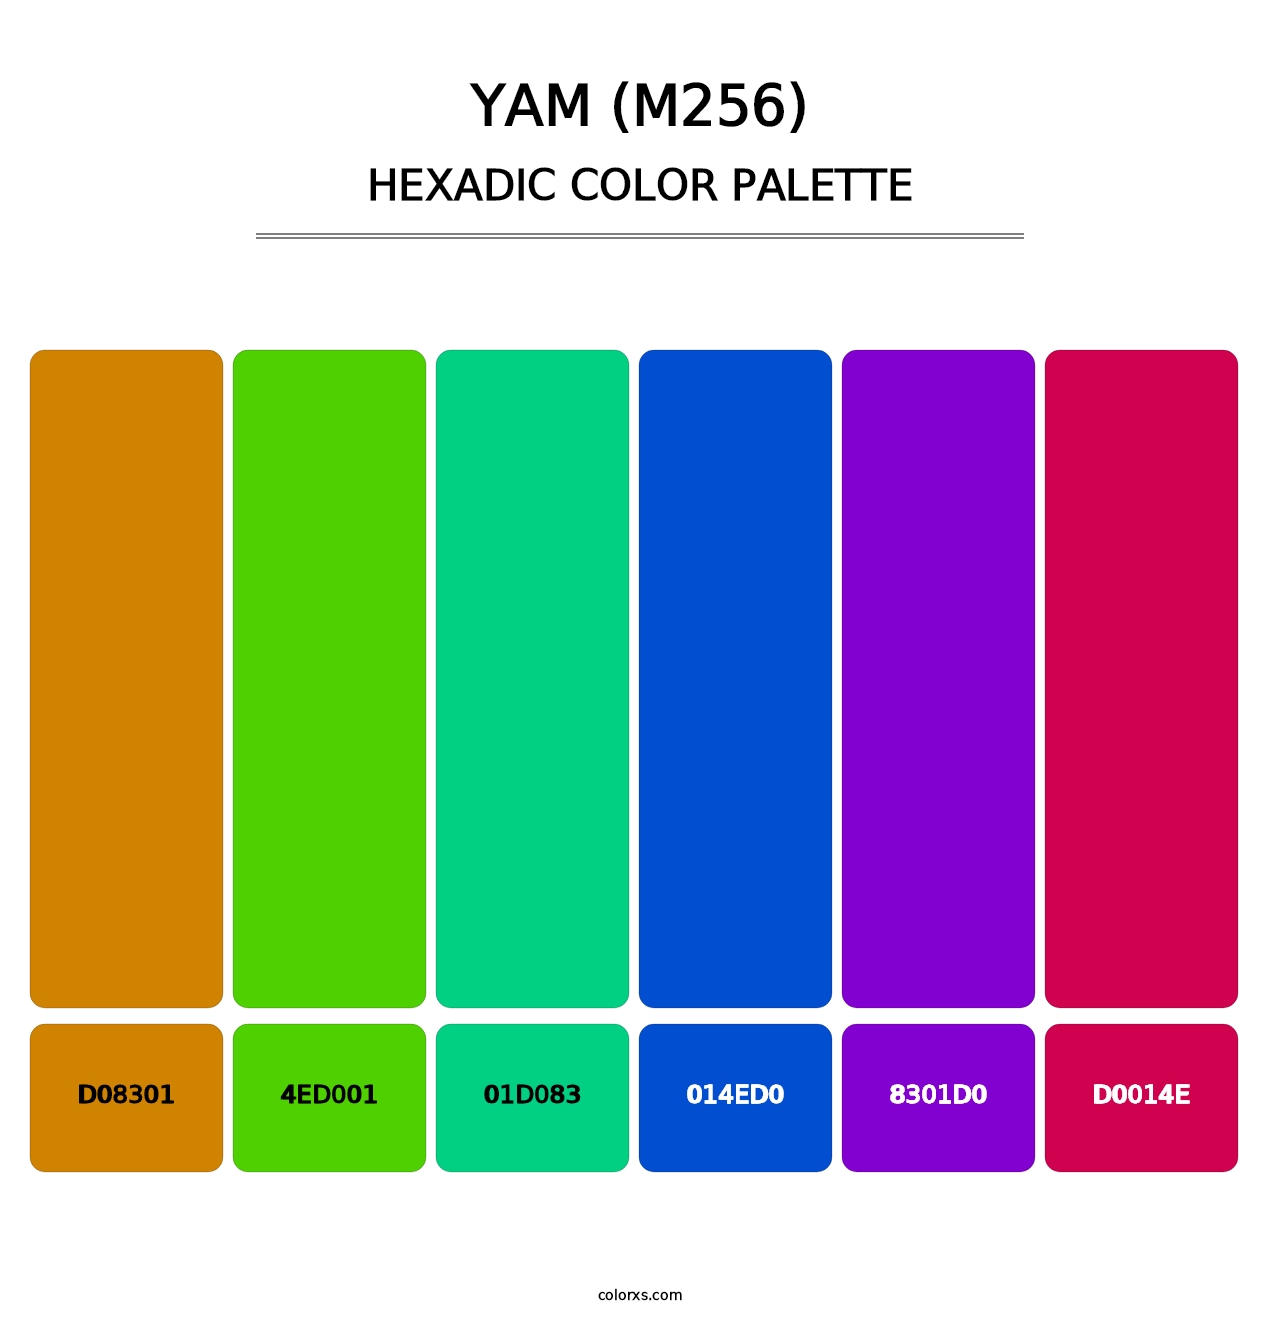 Yam (M256) - Hexadic Color Palette